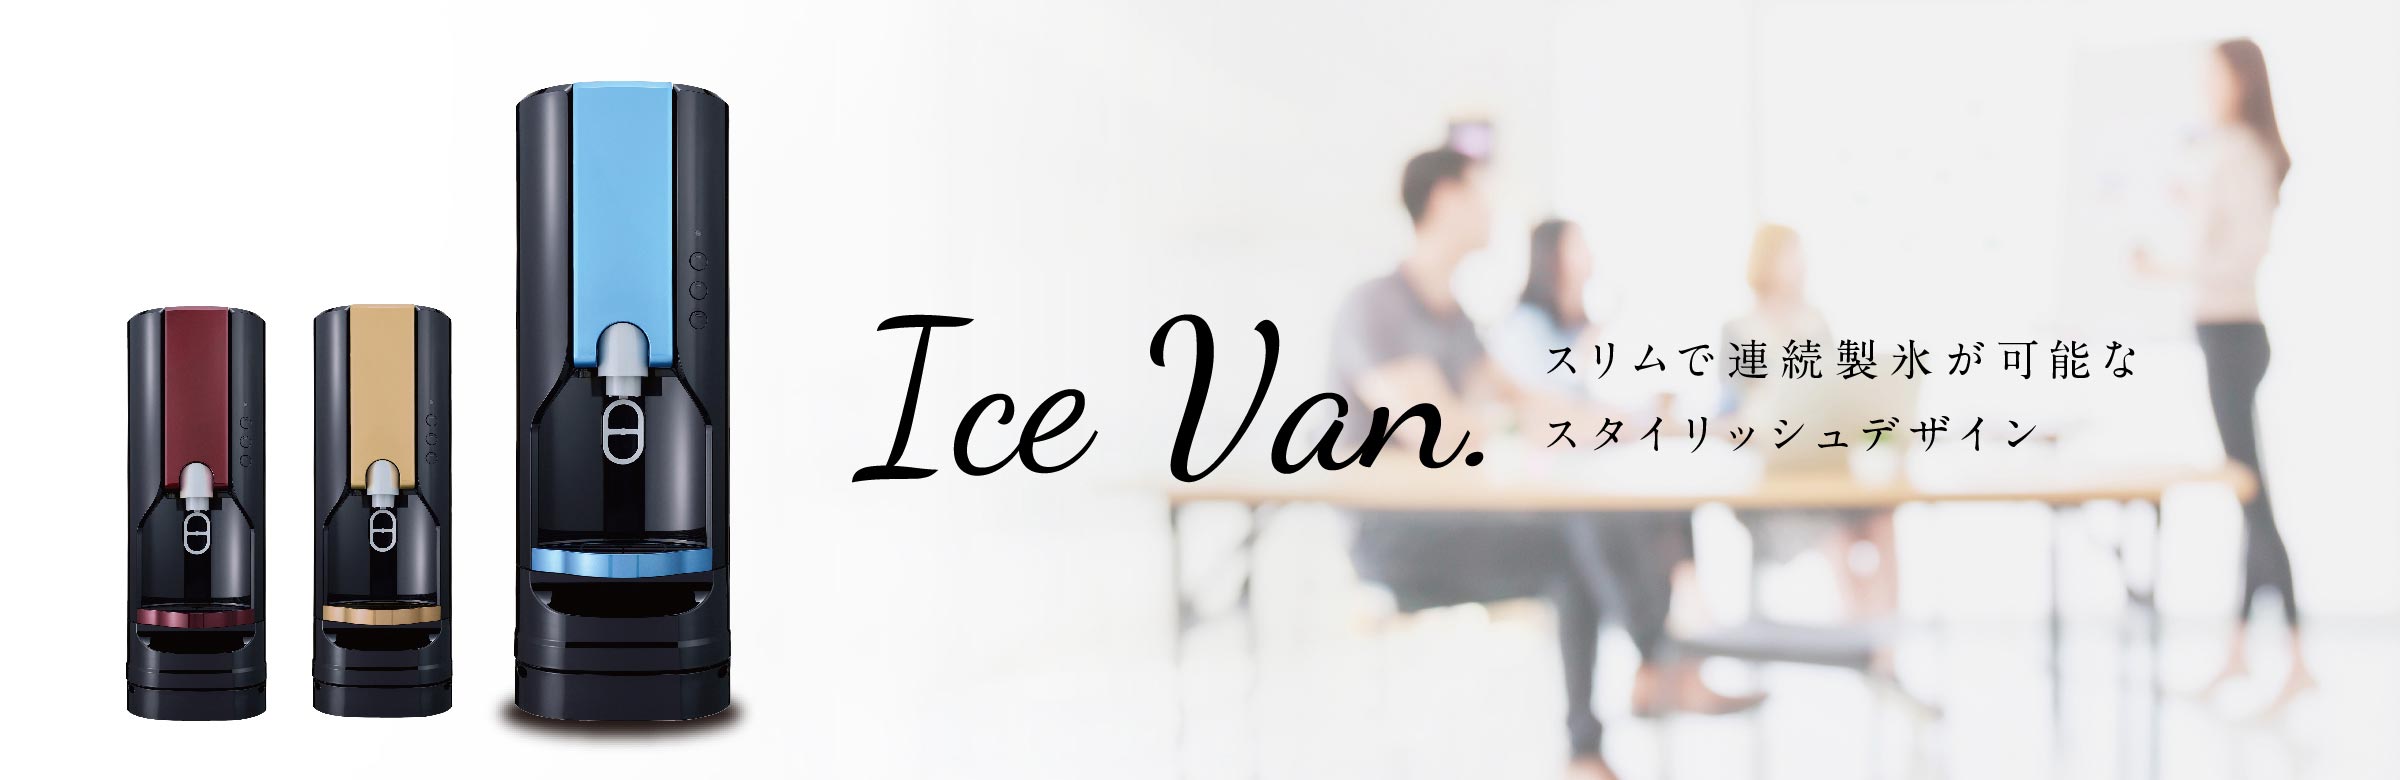 Ice Van. スリムで連続製氷が可能なスタイリッシュデザイン